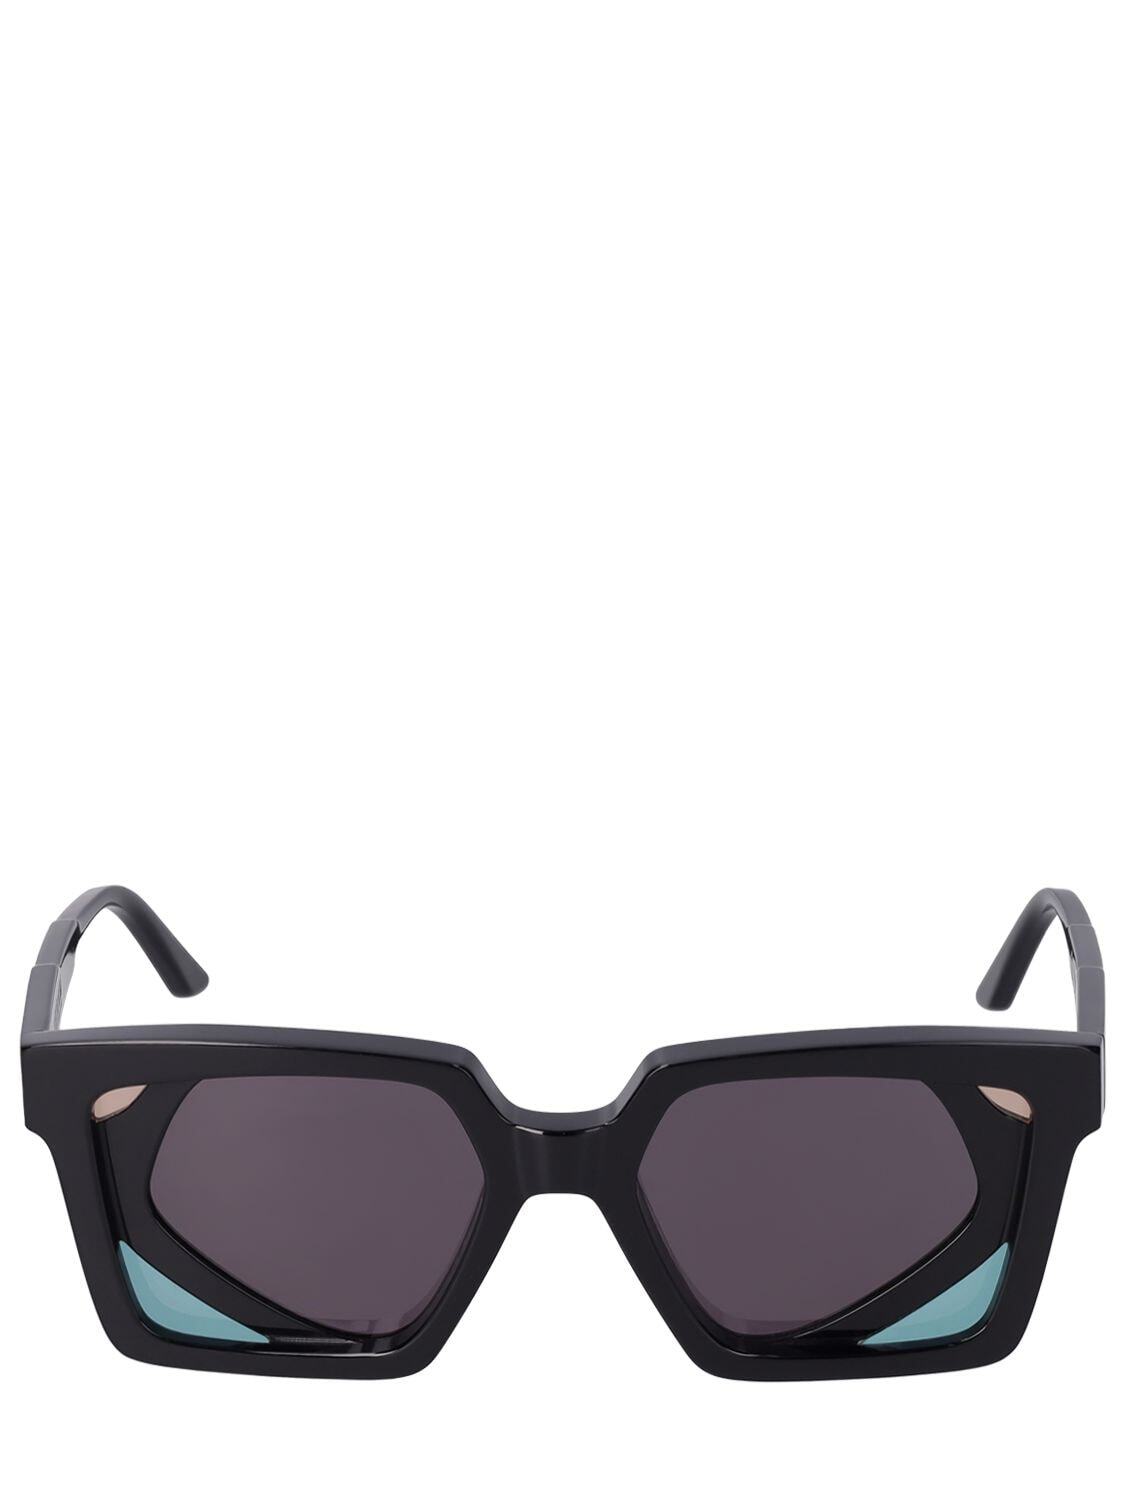 KUBORAUM BERLIN T6 Squared Acetate Sunglasses in black / grey